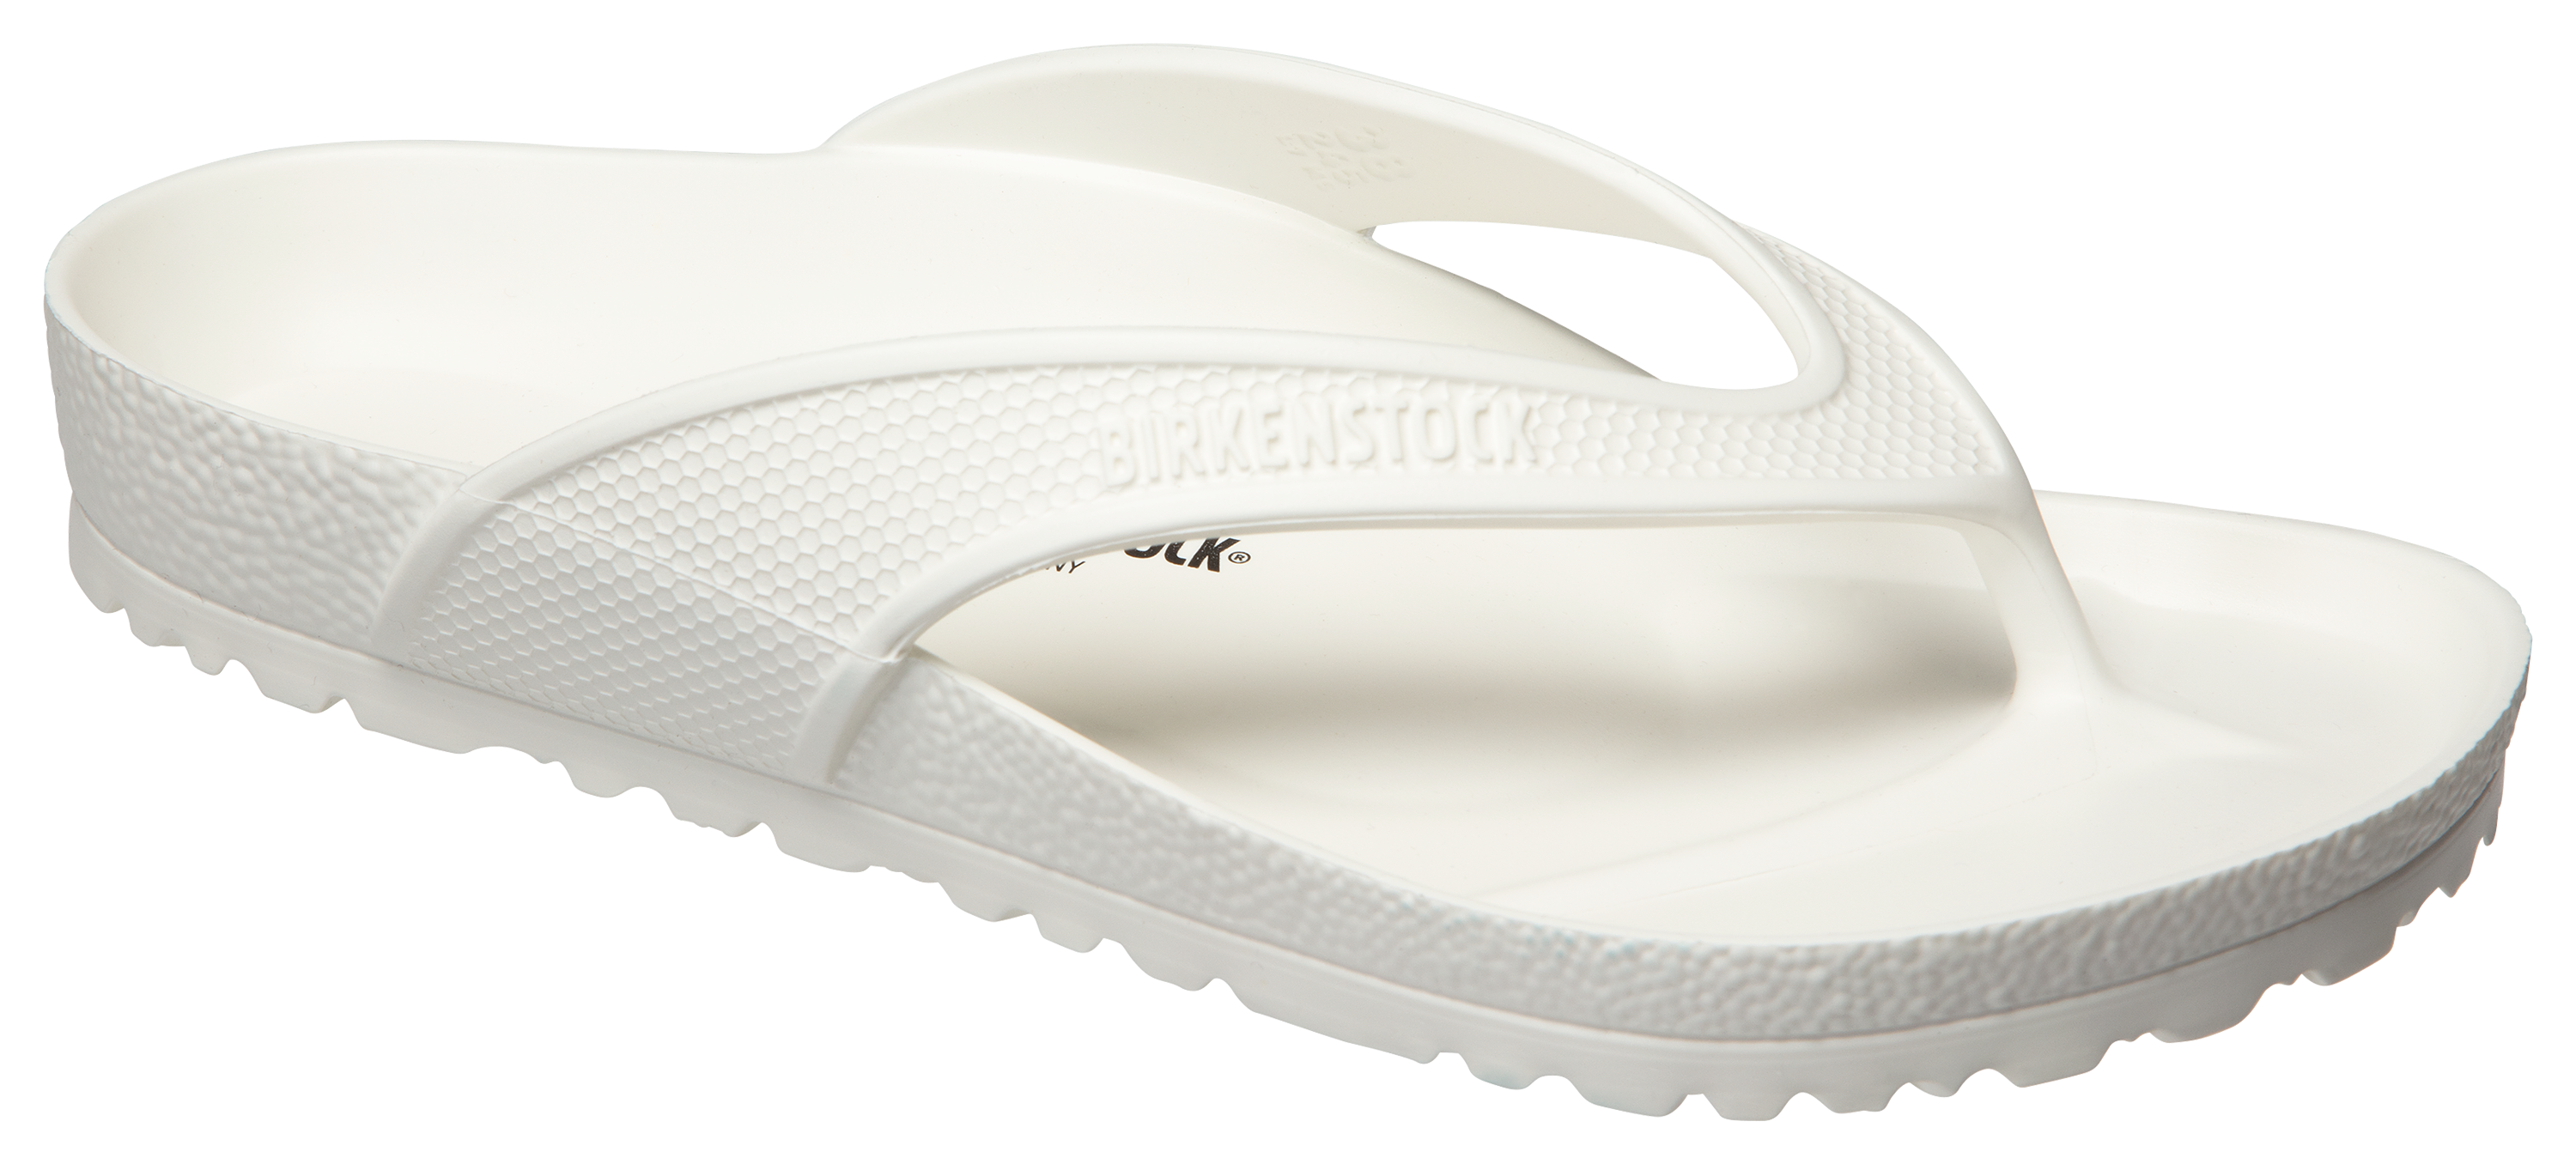 Birkenstock Honolulu EVA Thong Sandals for Ladies White 41M